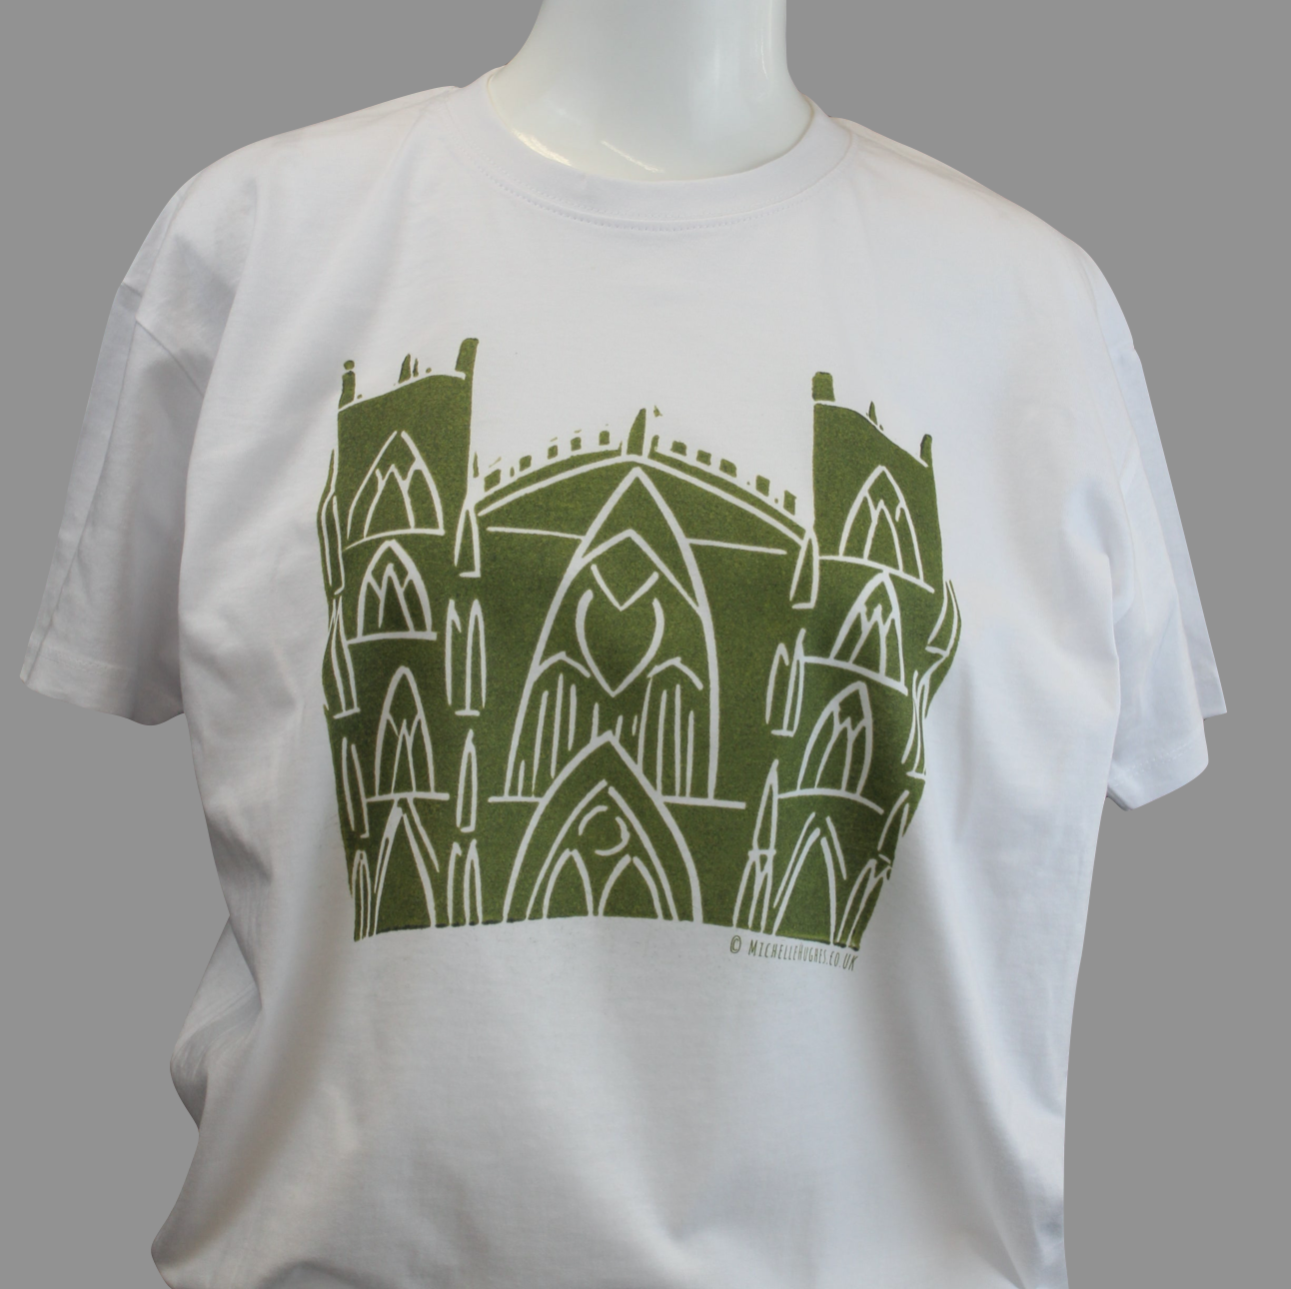 York Minster T-shirt